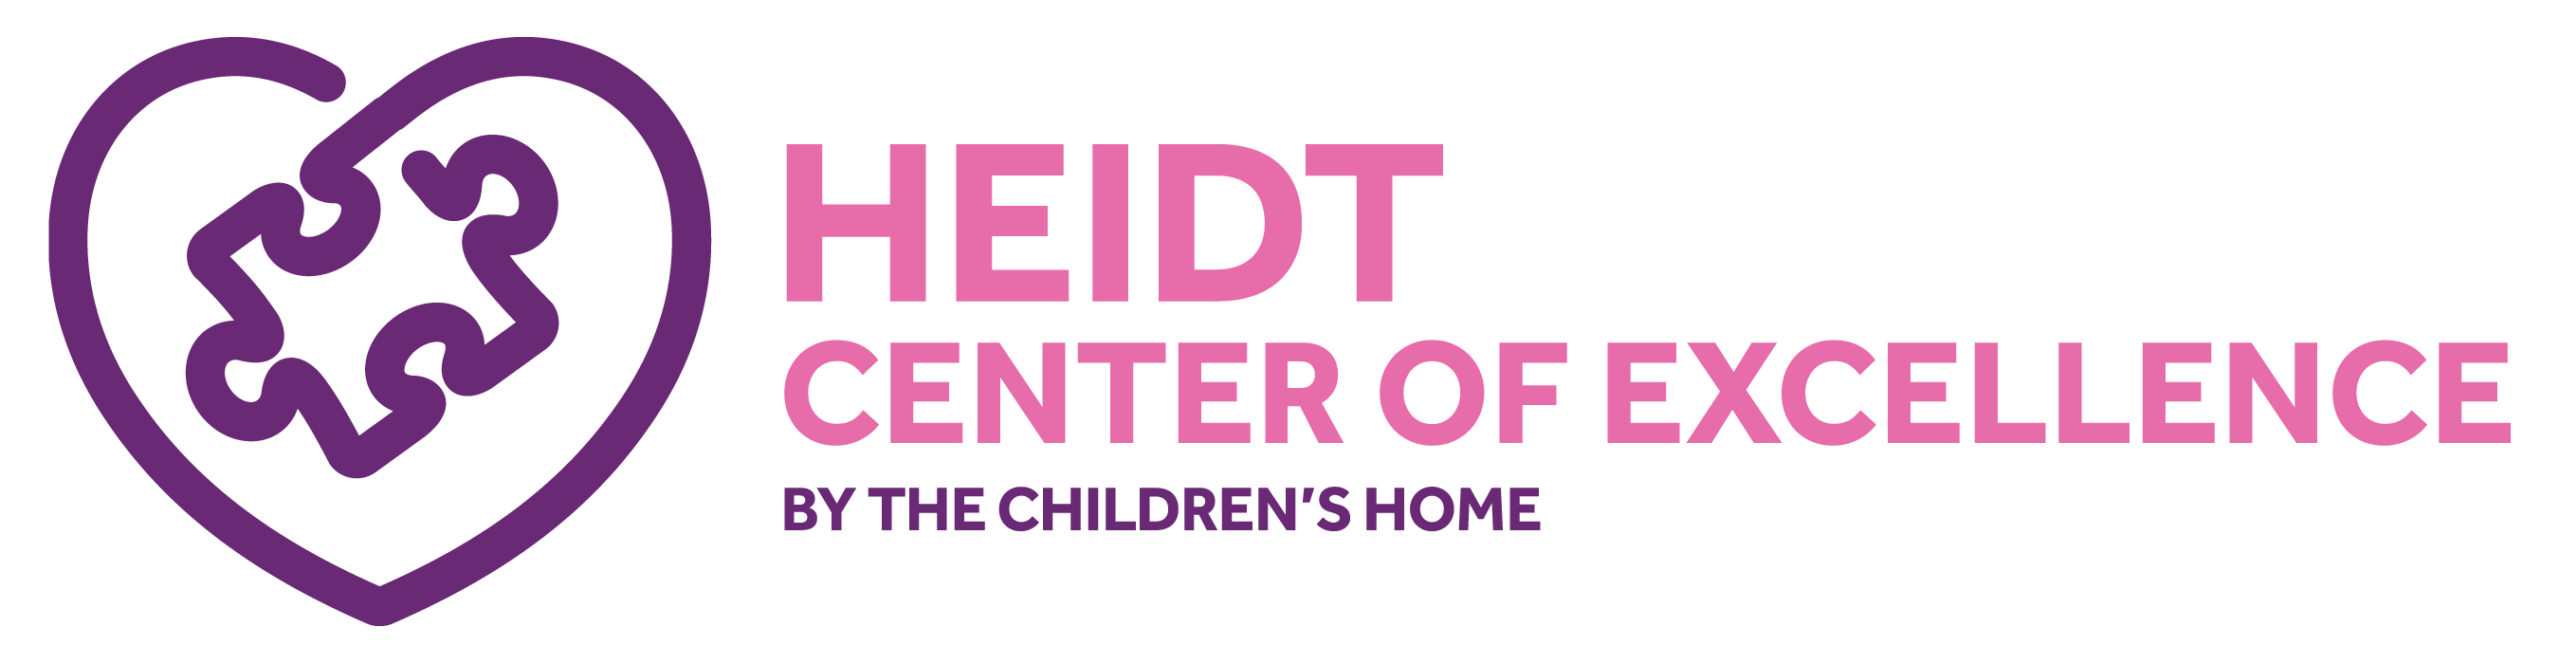 Heidt Center of Excellence by The Children's Home of Cincinnati Logo